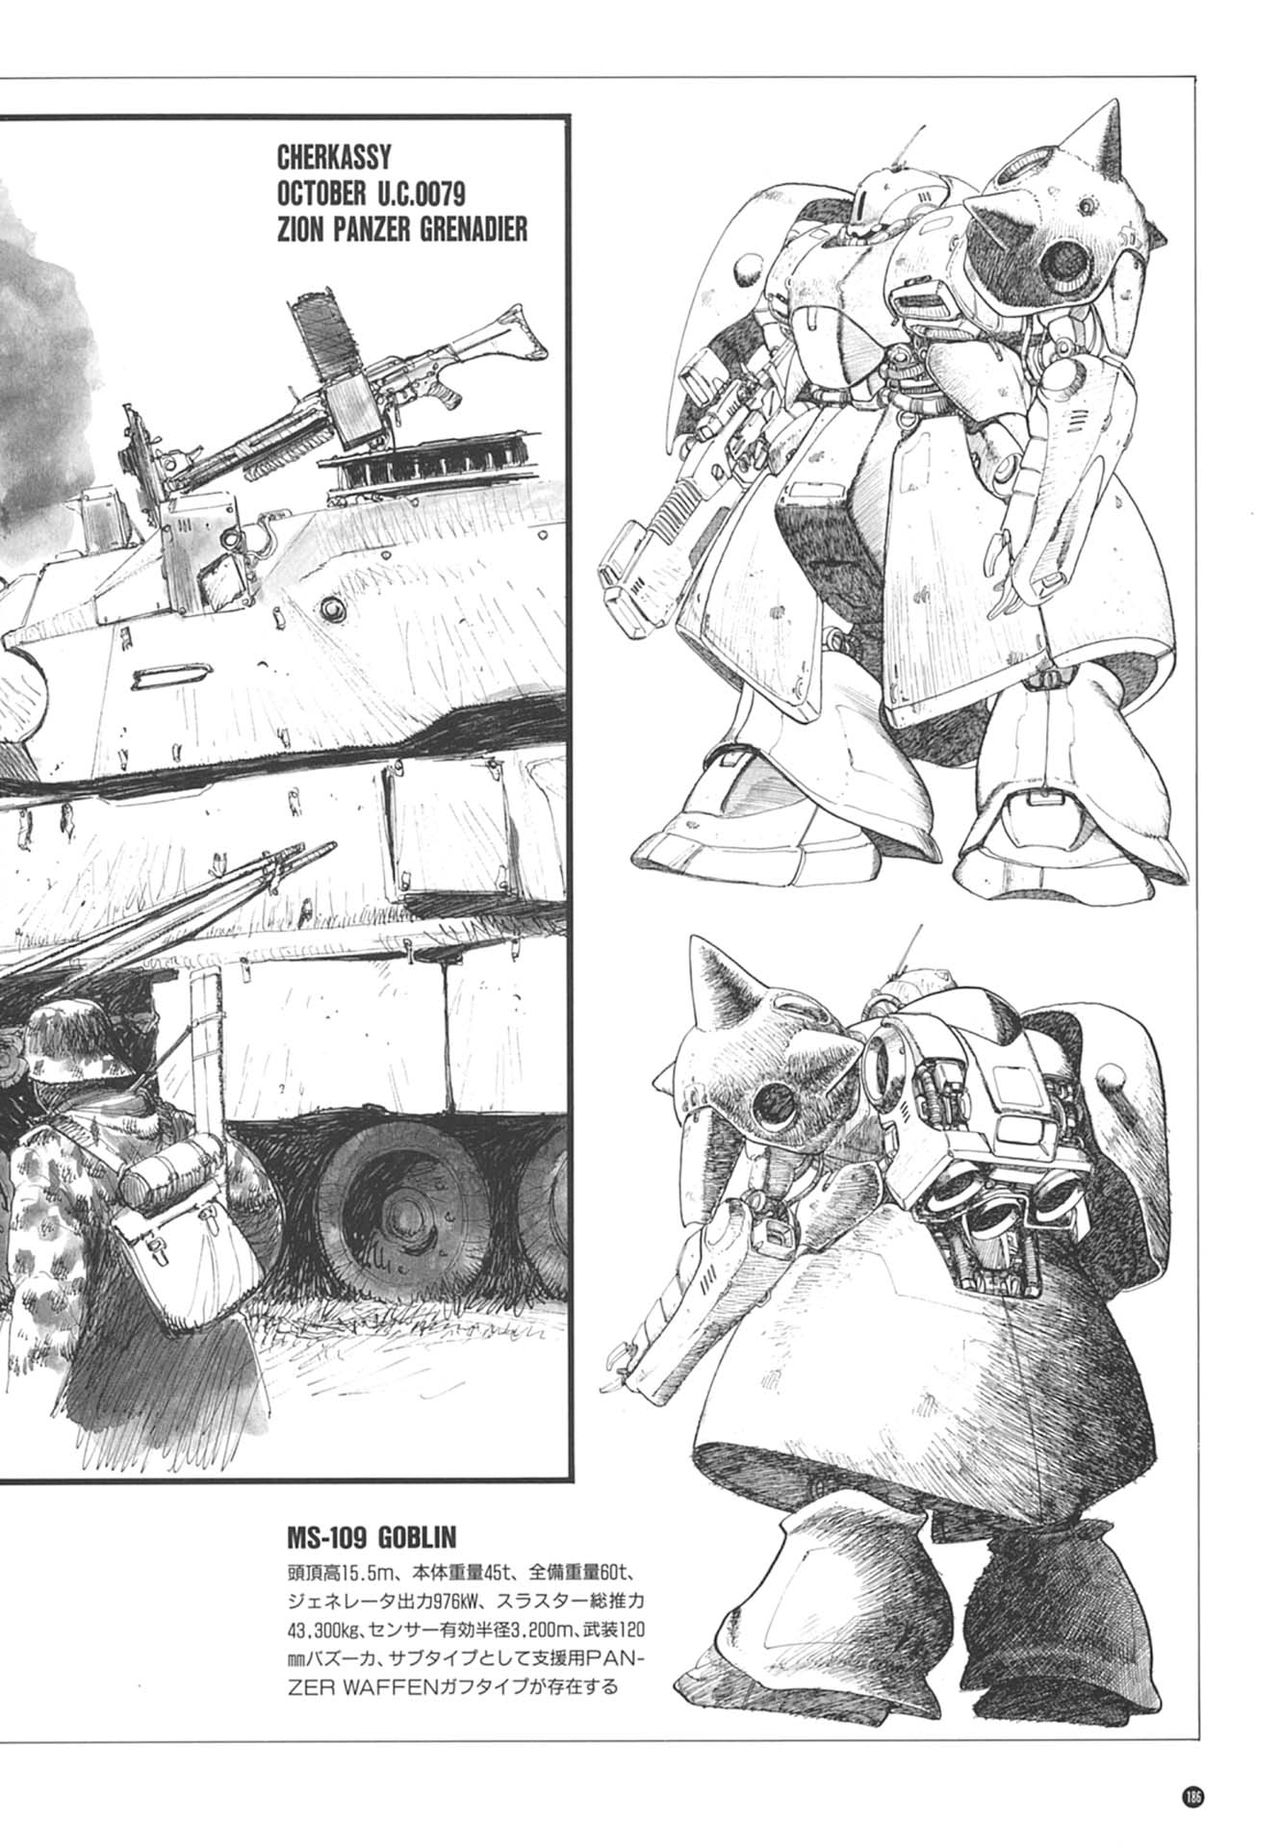 [Kazuhisa Kondo] Kazuhisa Kondo 2D & 3D Works - Go Ahead - From Mobile Suit Gundam to Original Mechanism 185